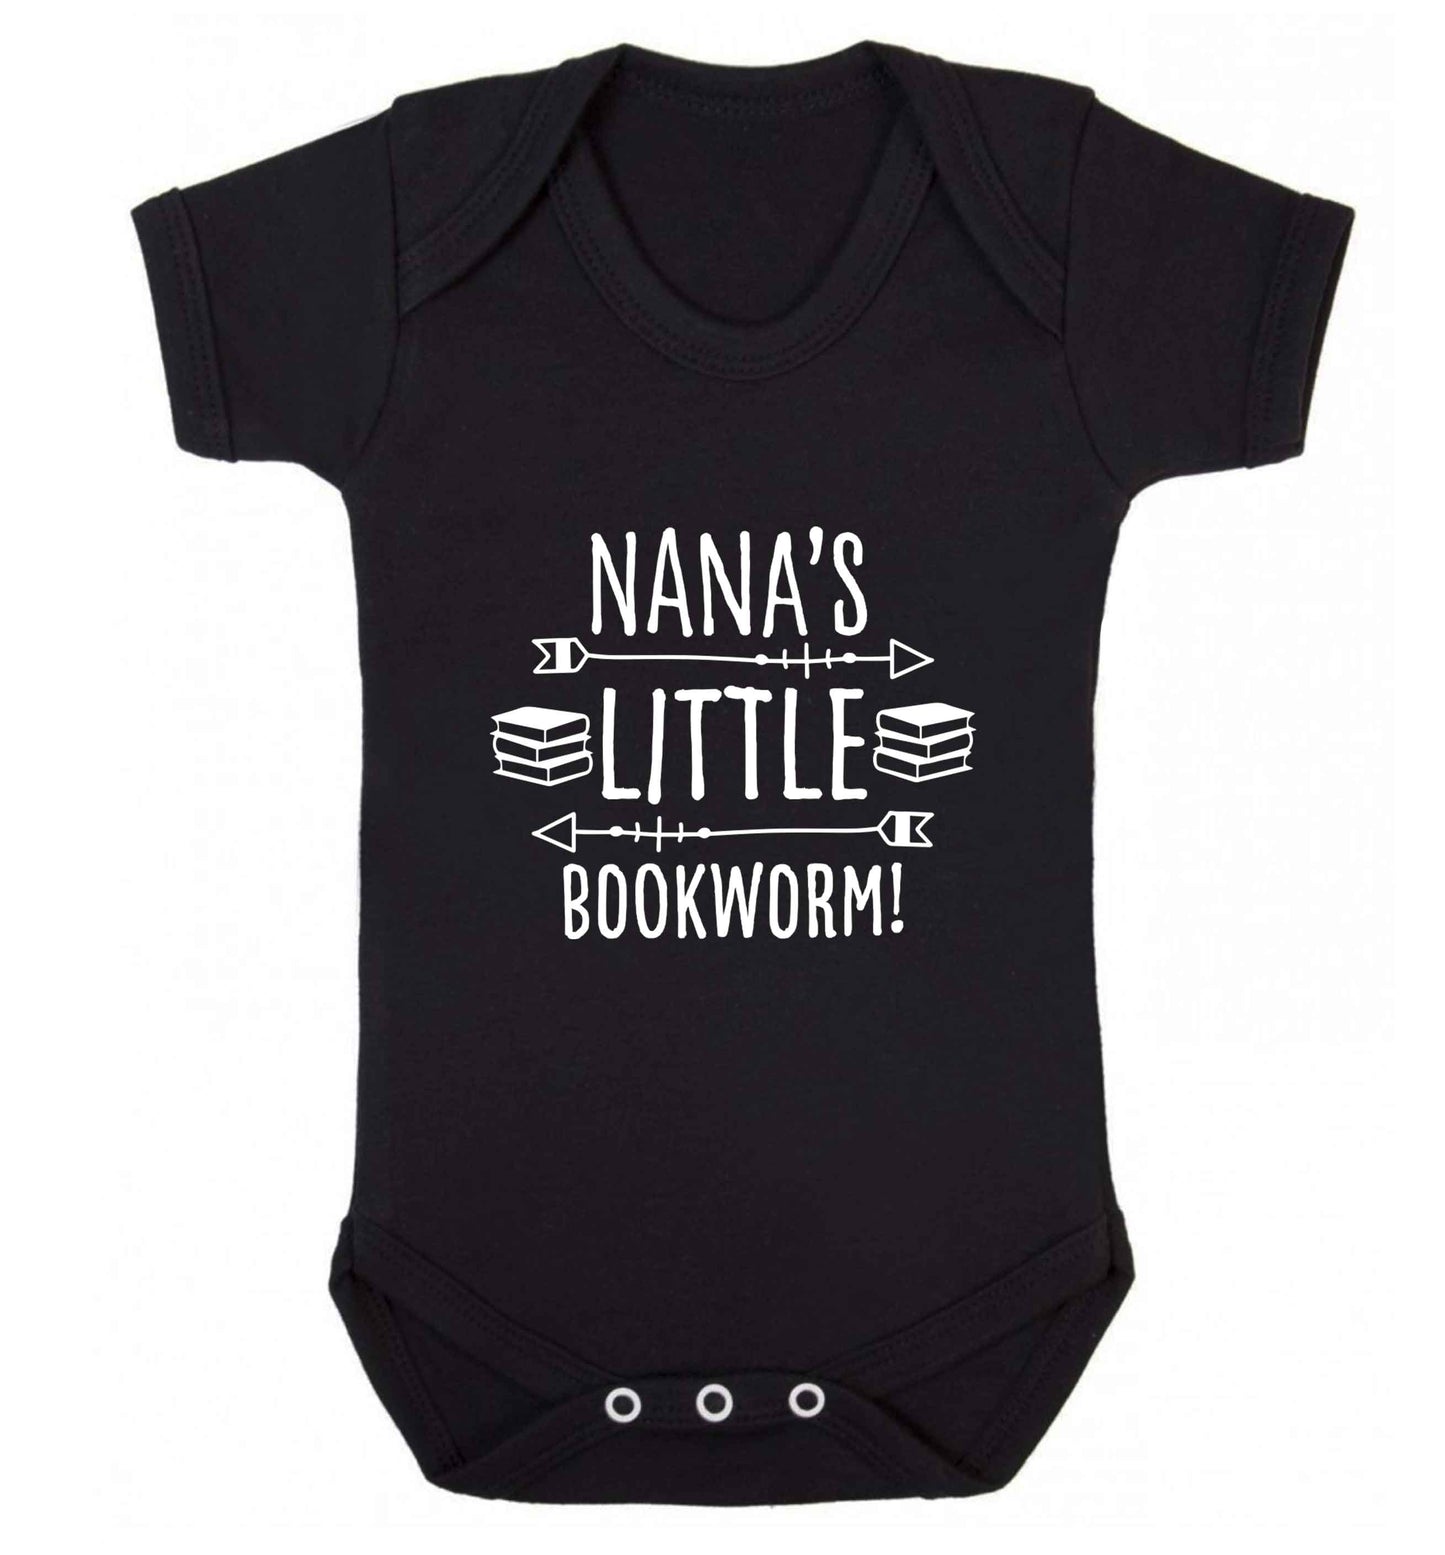 Nana's little bookworm baby vest black 18-24 months